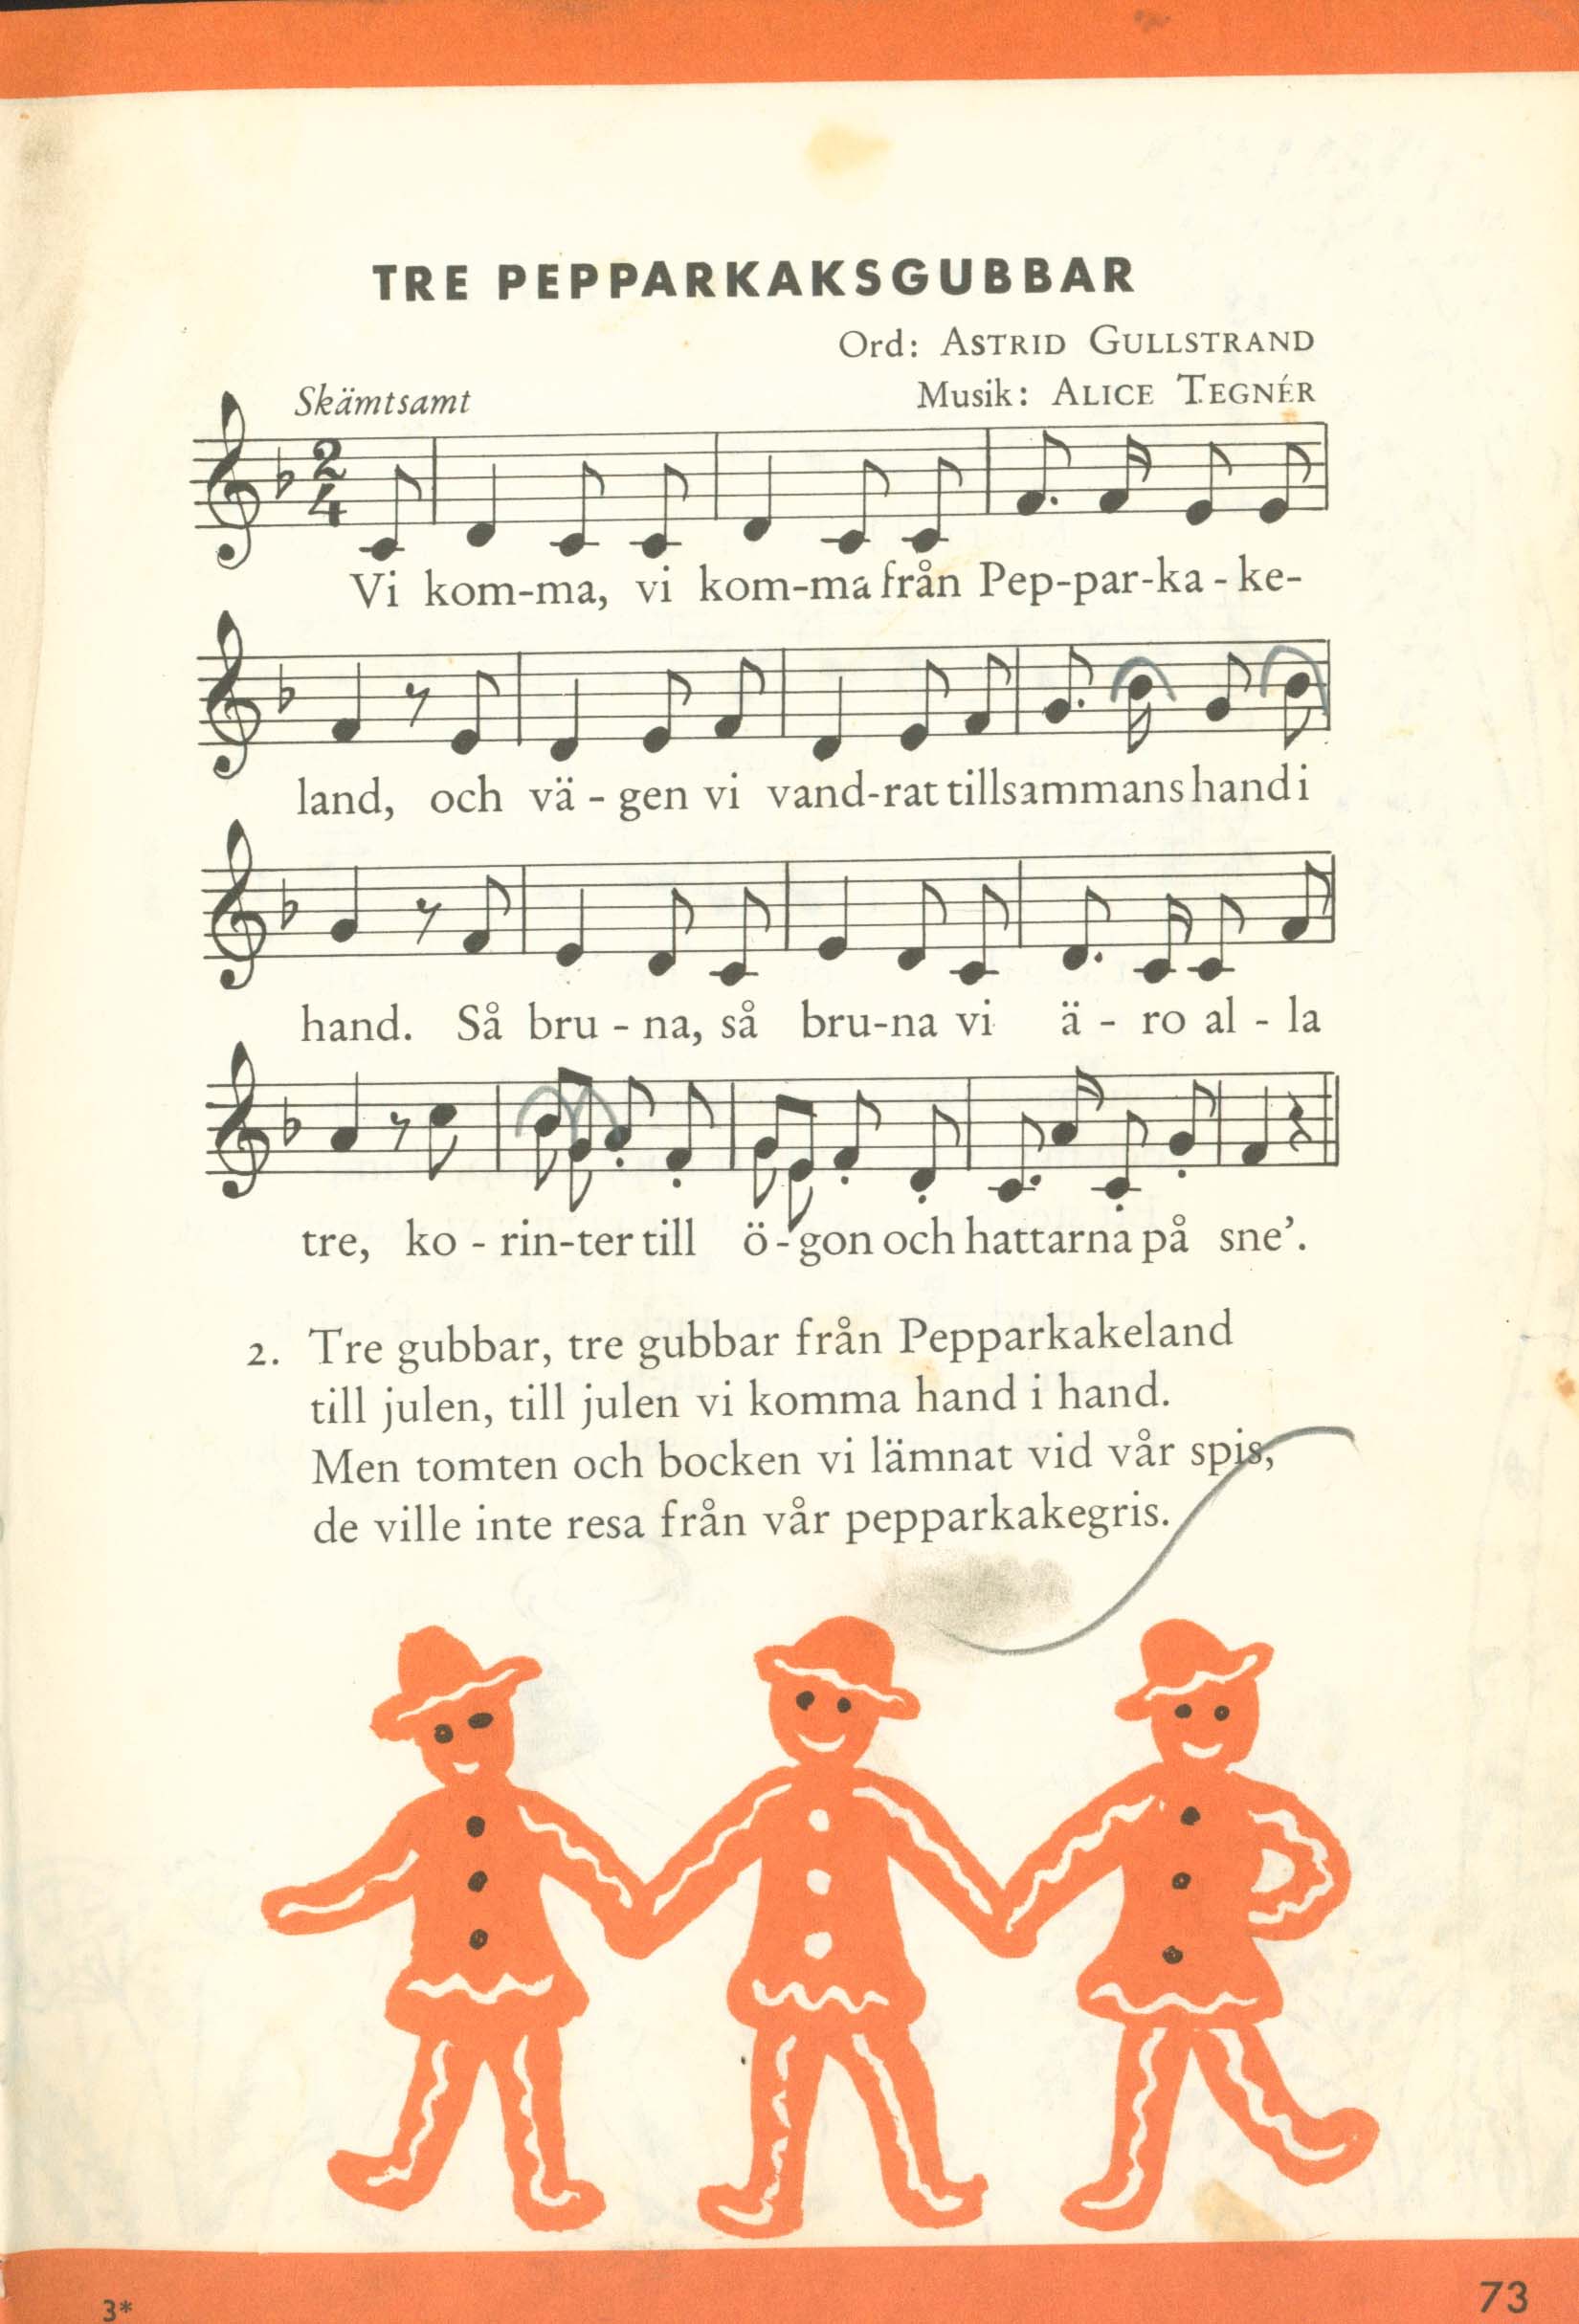 Dal libro "Nu ska vi sjunga" - Tre pepparkaksgubbar